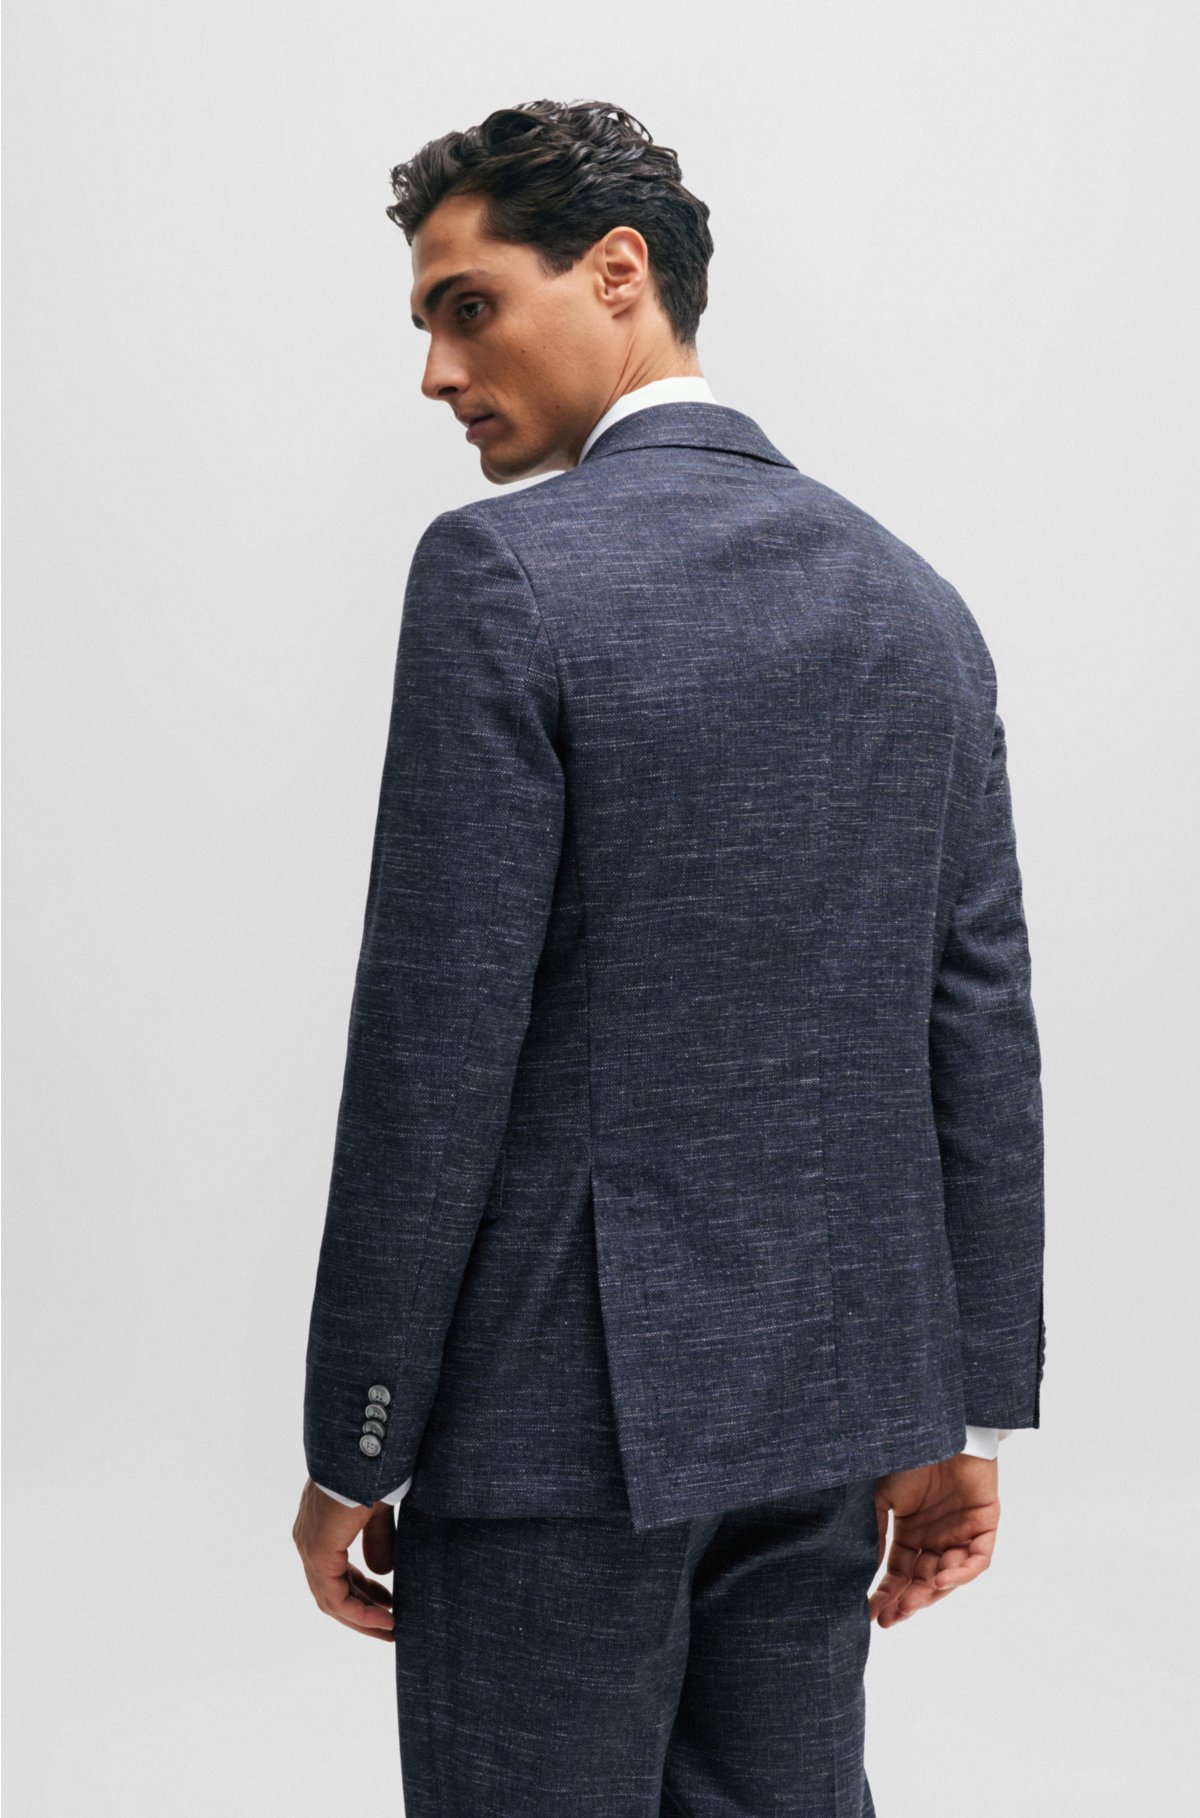 Slim-fit jacket in a patterned wool blend, Dark Blue